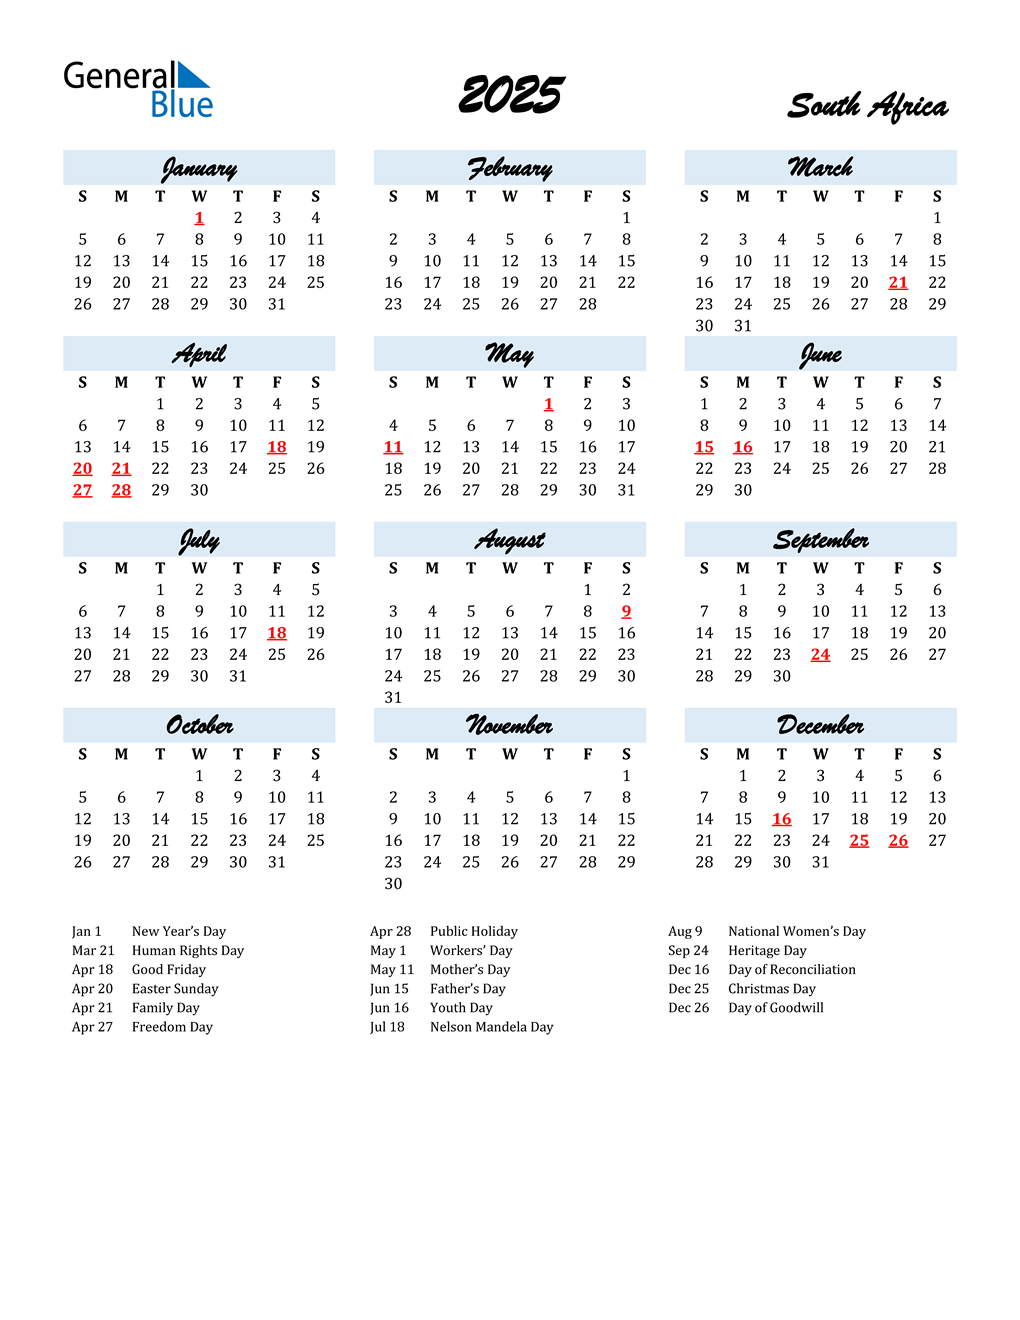 2025-south-africa-calendar-with-holidays